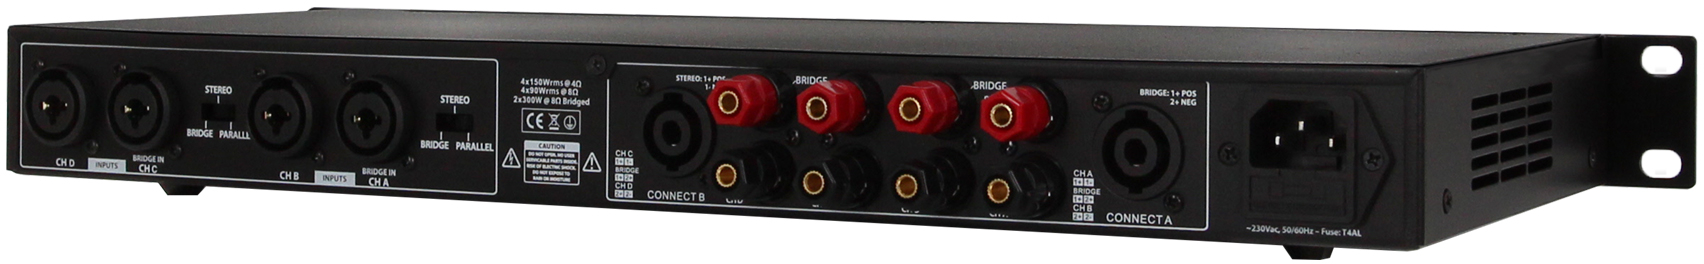 Definitive Audio Quad 1u 150d - Multi-kanalen krachtversterker - Variation 2